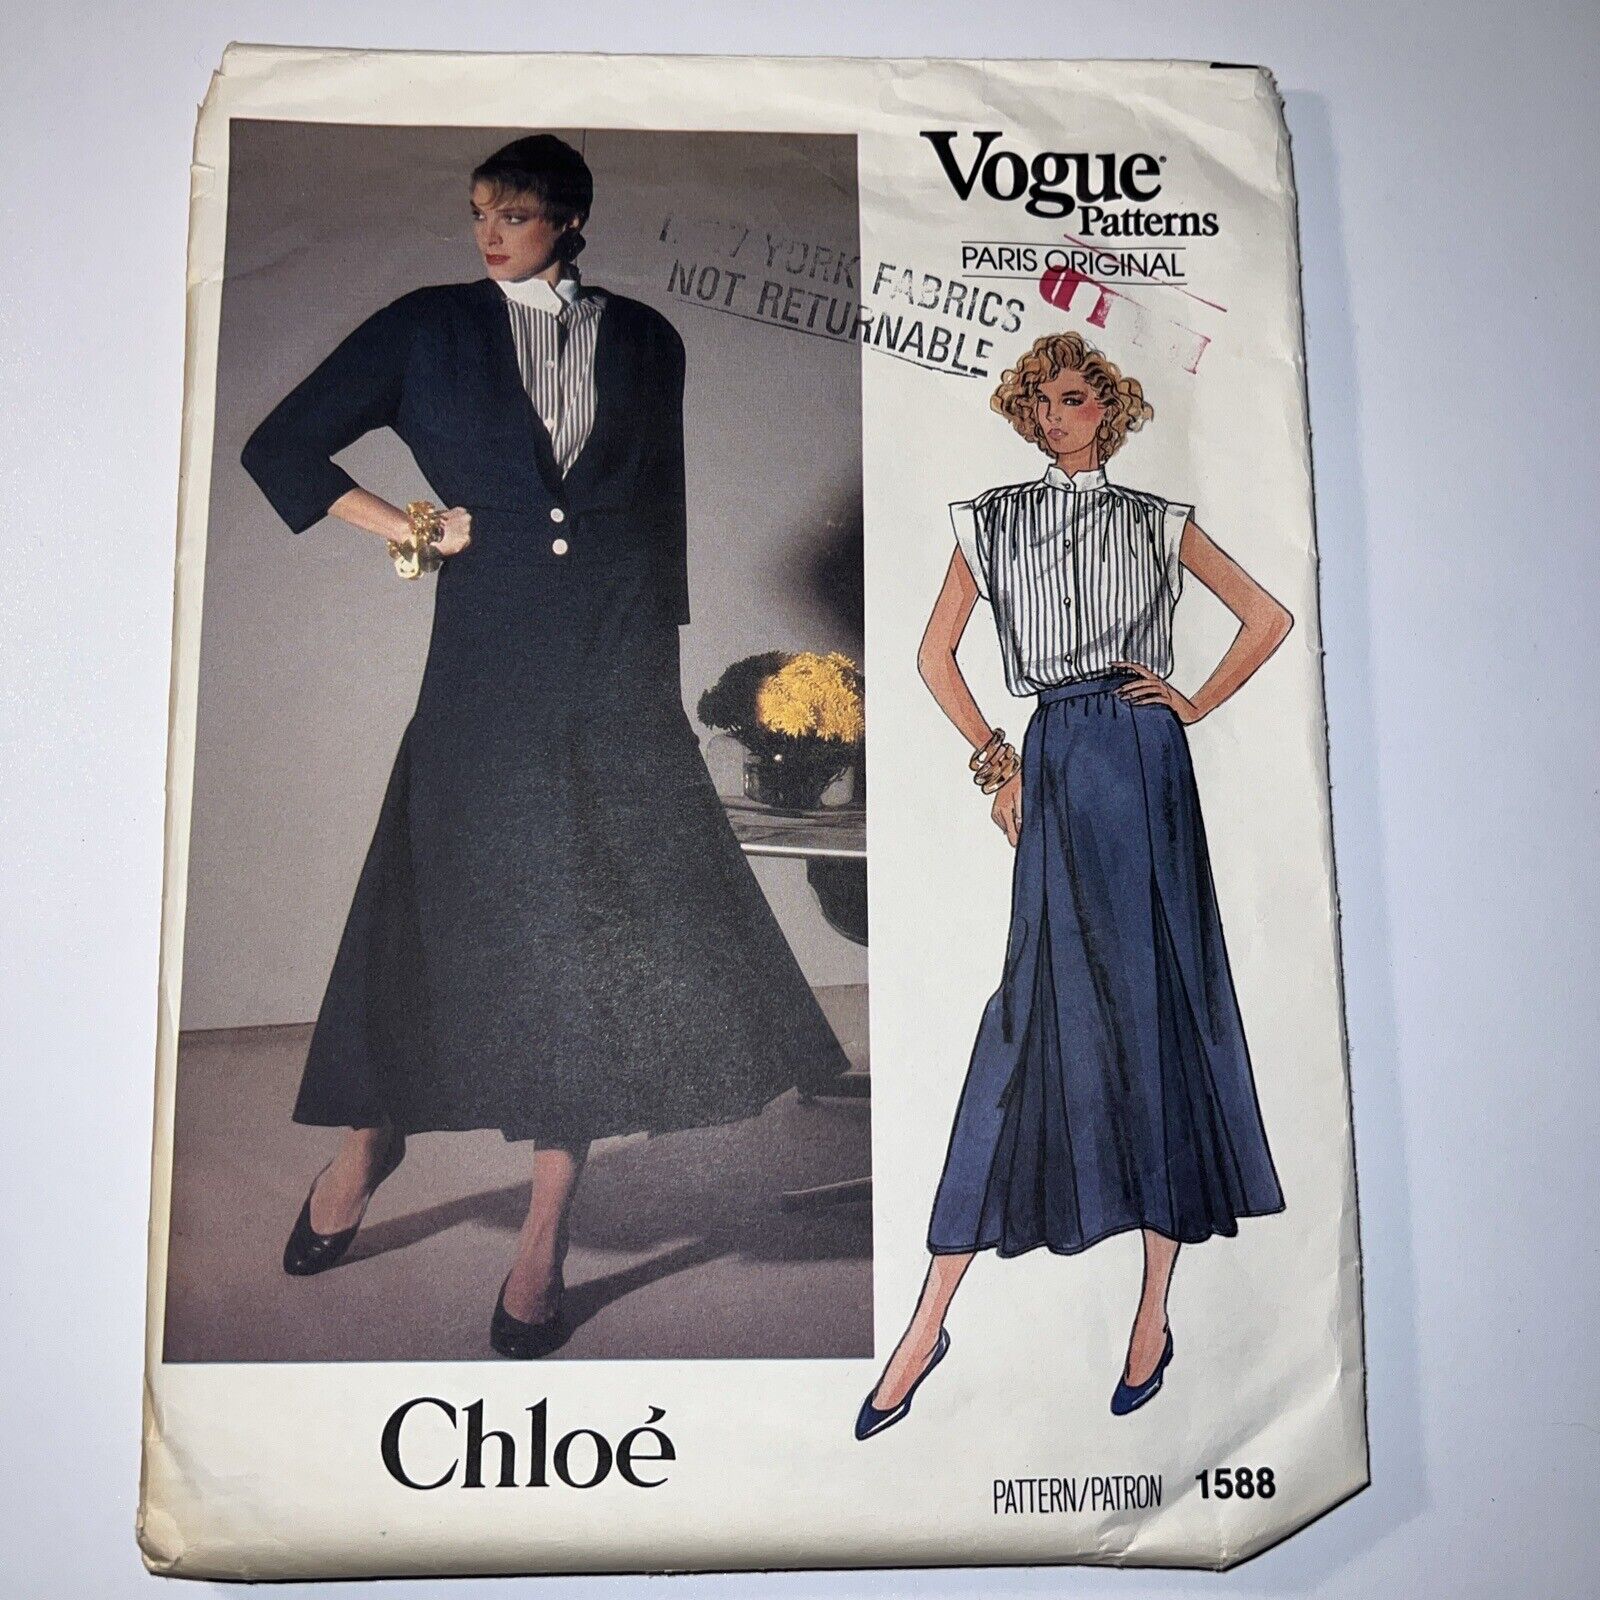 Vogue Paris Pattern Chloe Sz 10 1588 Sewing Jacket Skirt Blouse Designer Cut